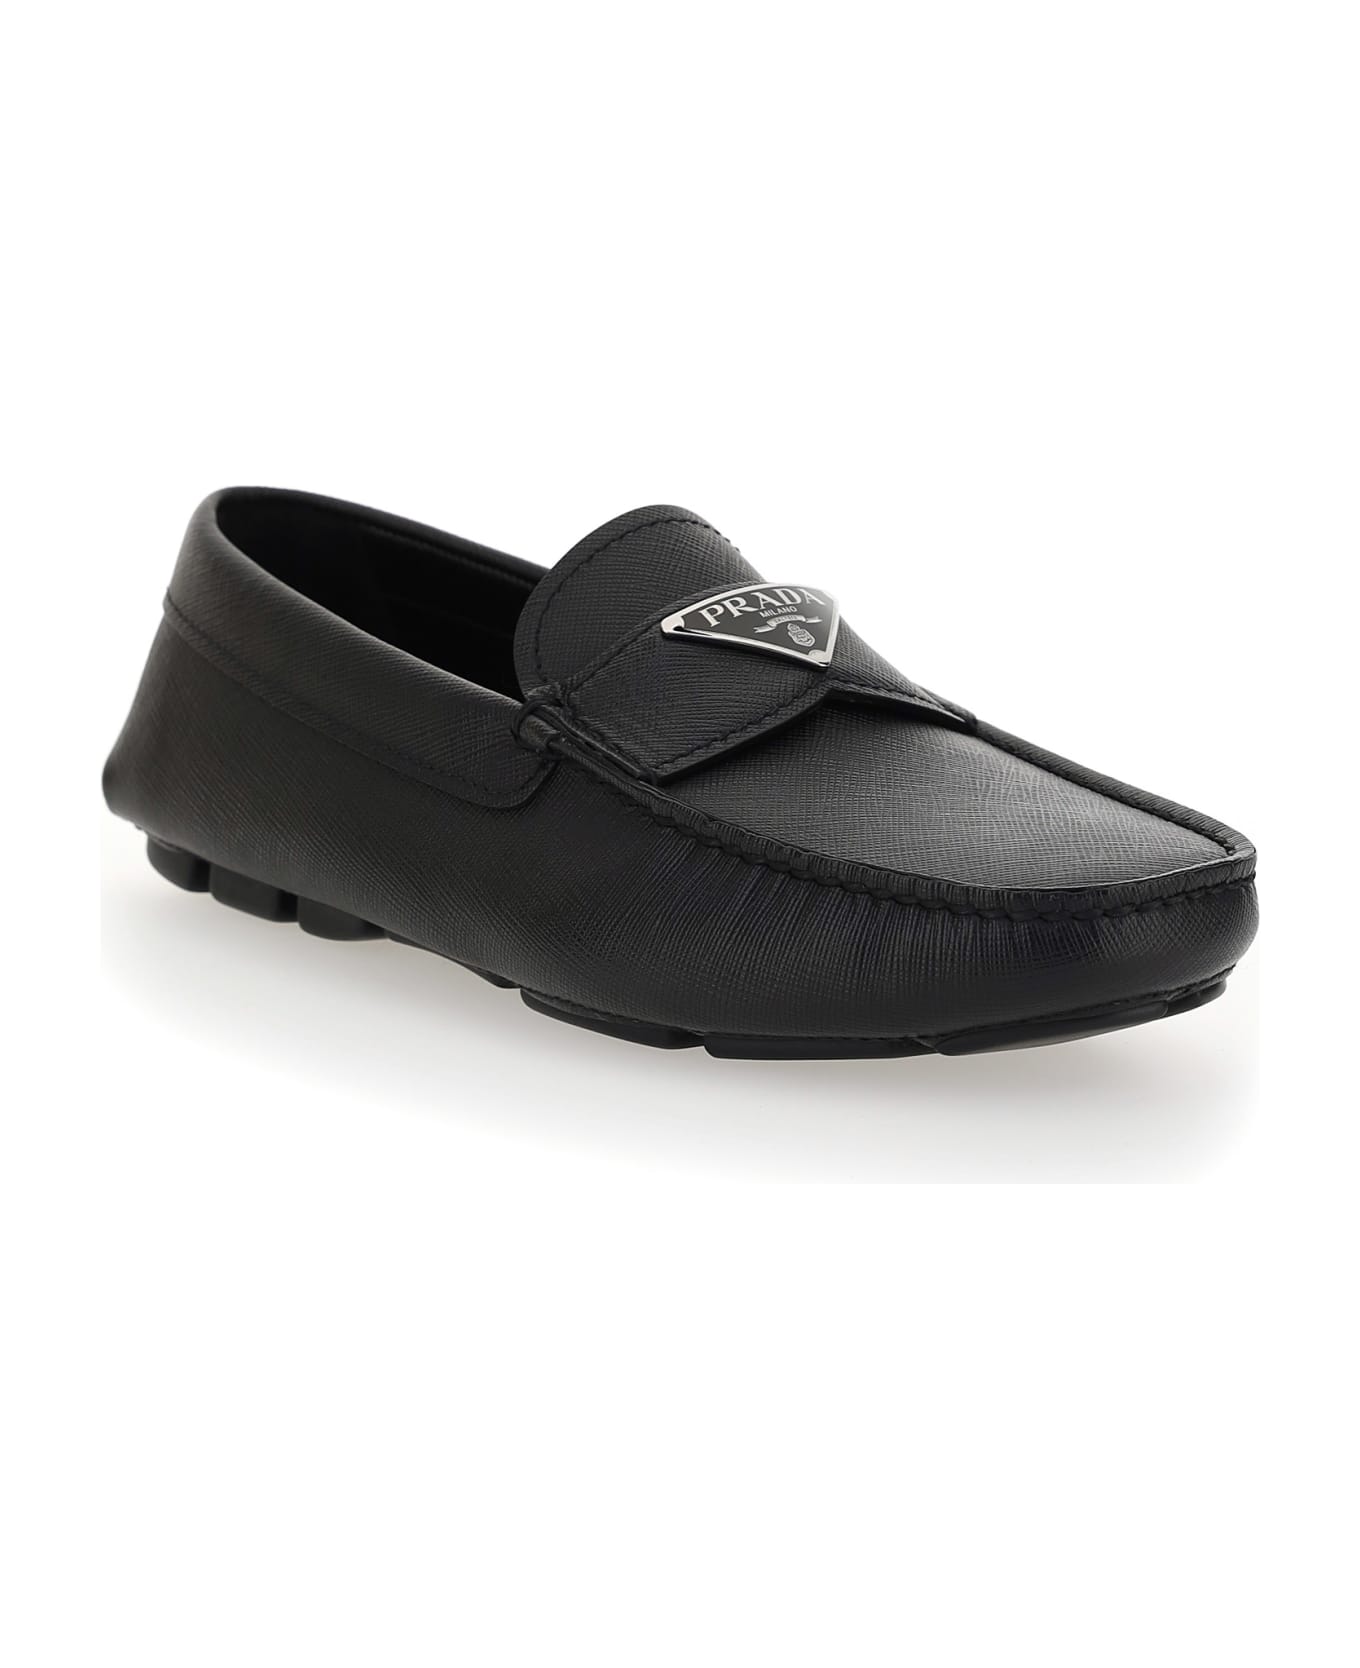 Prada Men's Black Leather Loafers - Nero